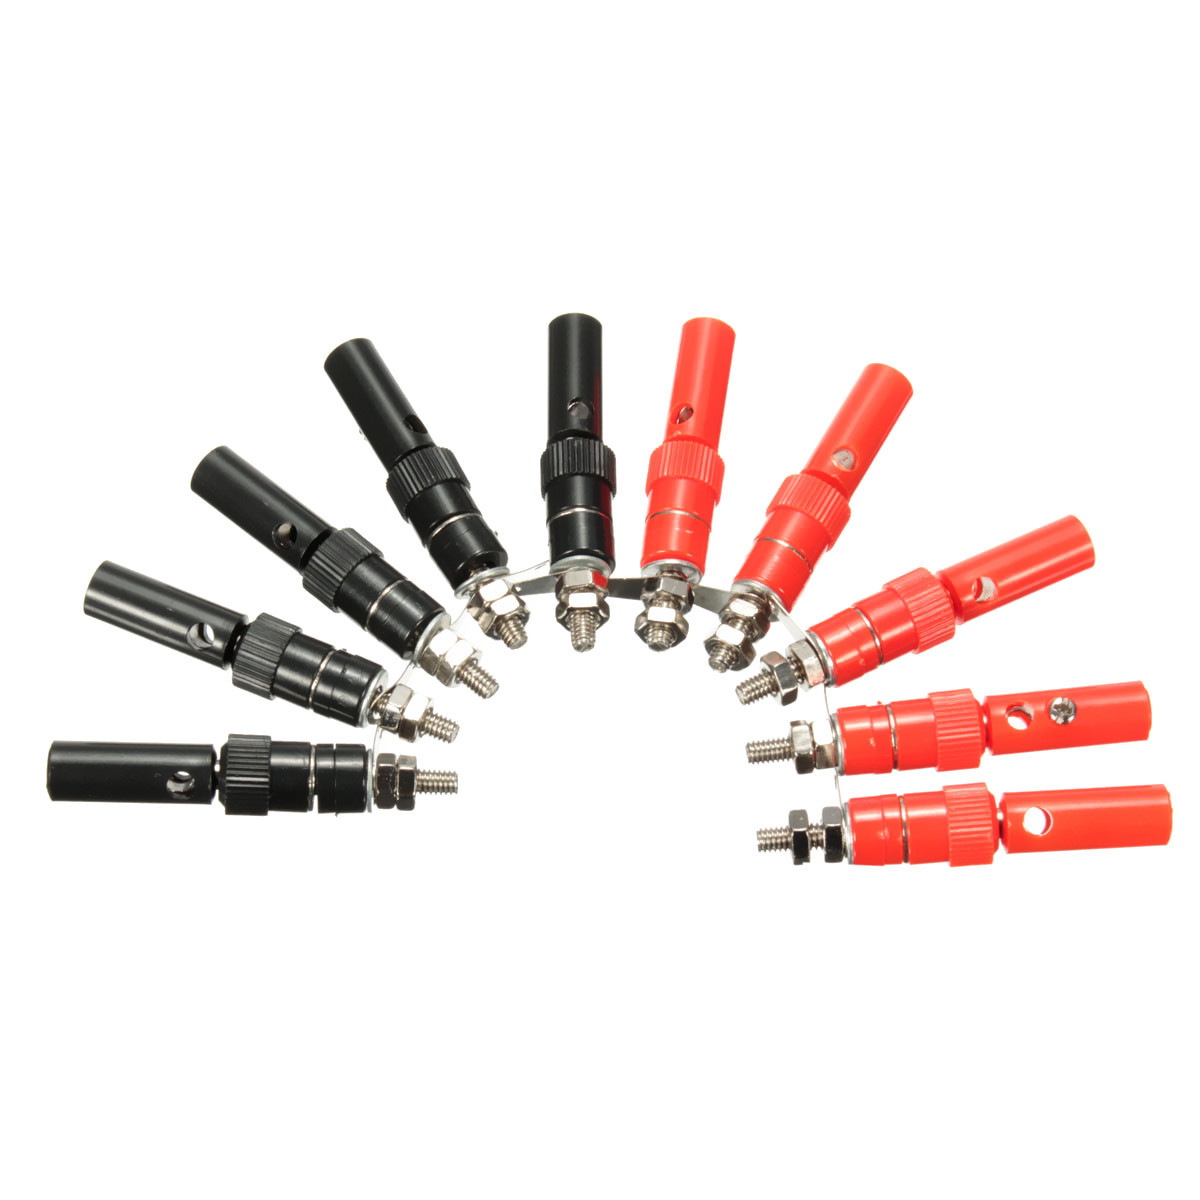 DANIU-50-Pairs-4mm-Terminal-Banana-Plug-Socket-Jack-Connectors-Instrument-Light-Tools-Black-and-Red-1358118-3